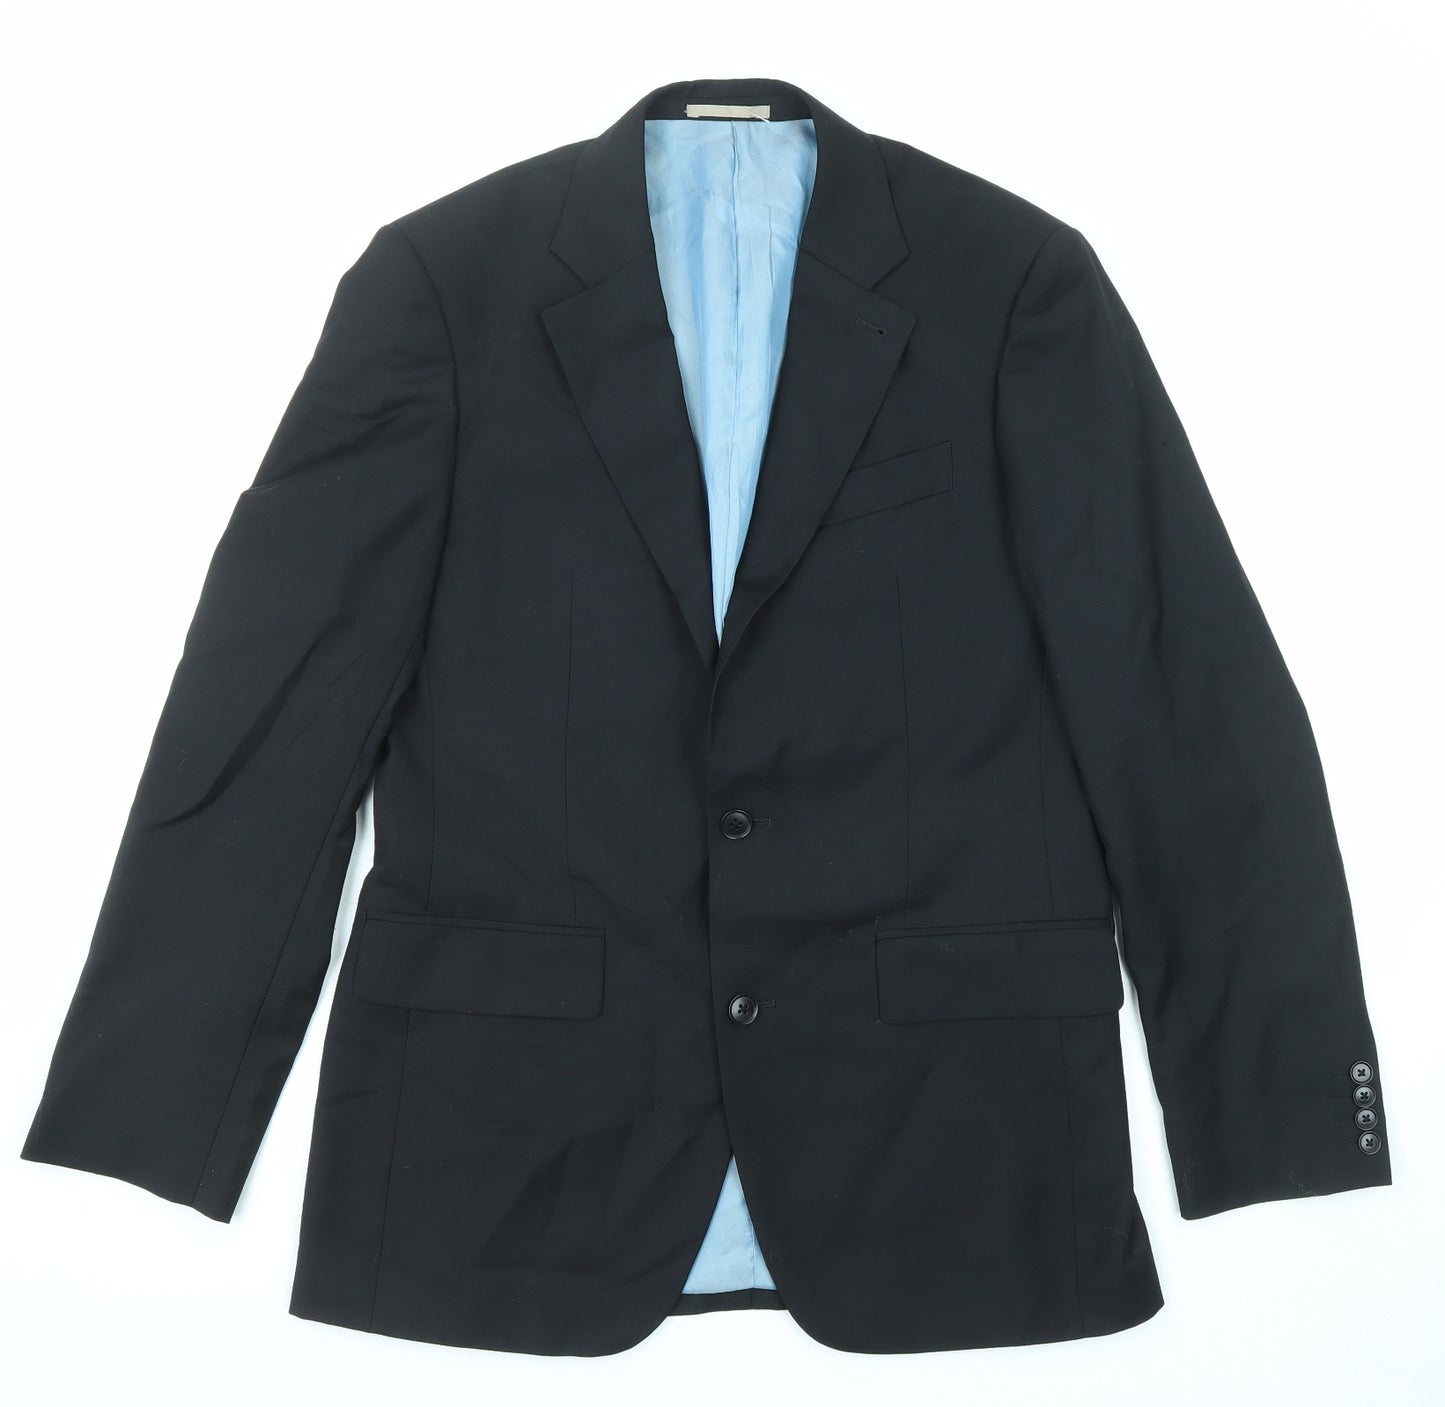 NEXT Mens Black Wool Jacket Suit Jacket Size 38 Regular